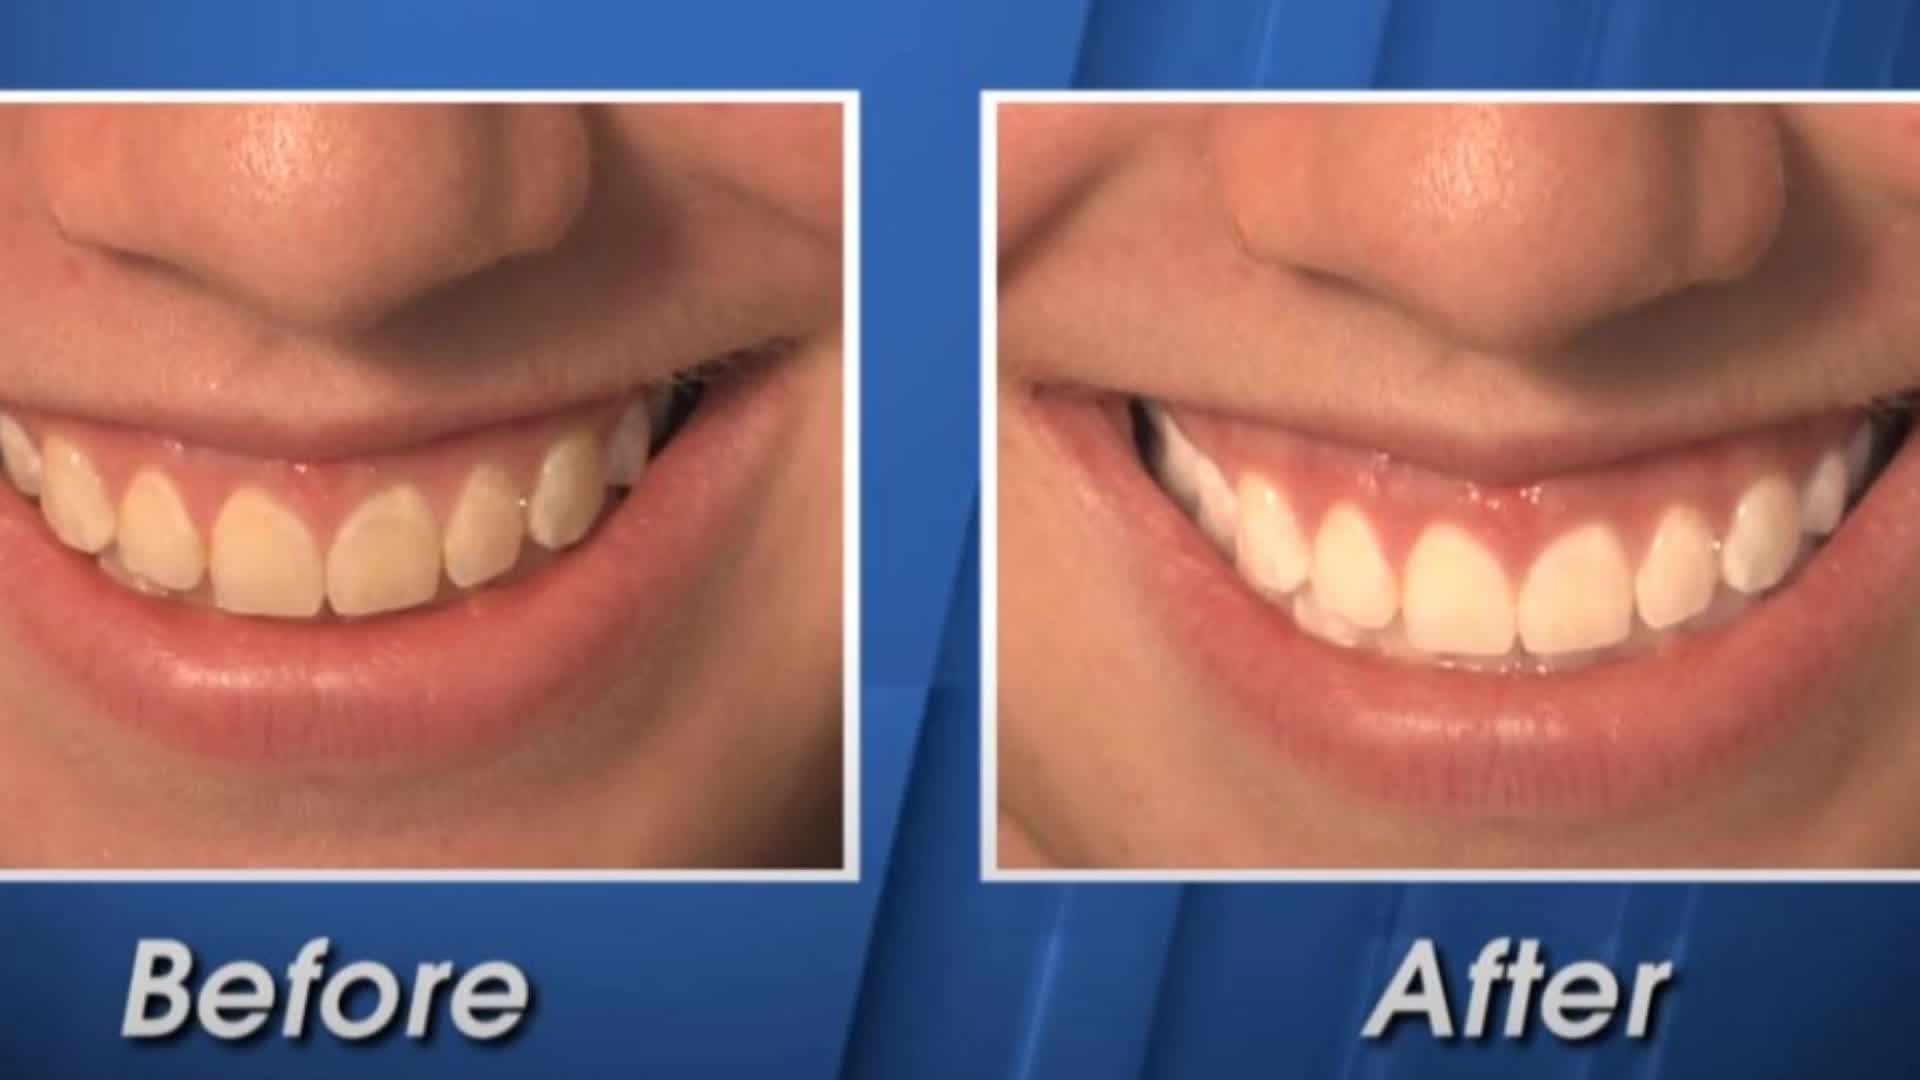 Florida Dental Care of Miller | Best Teeth Whitening Miami, FL